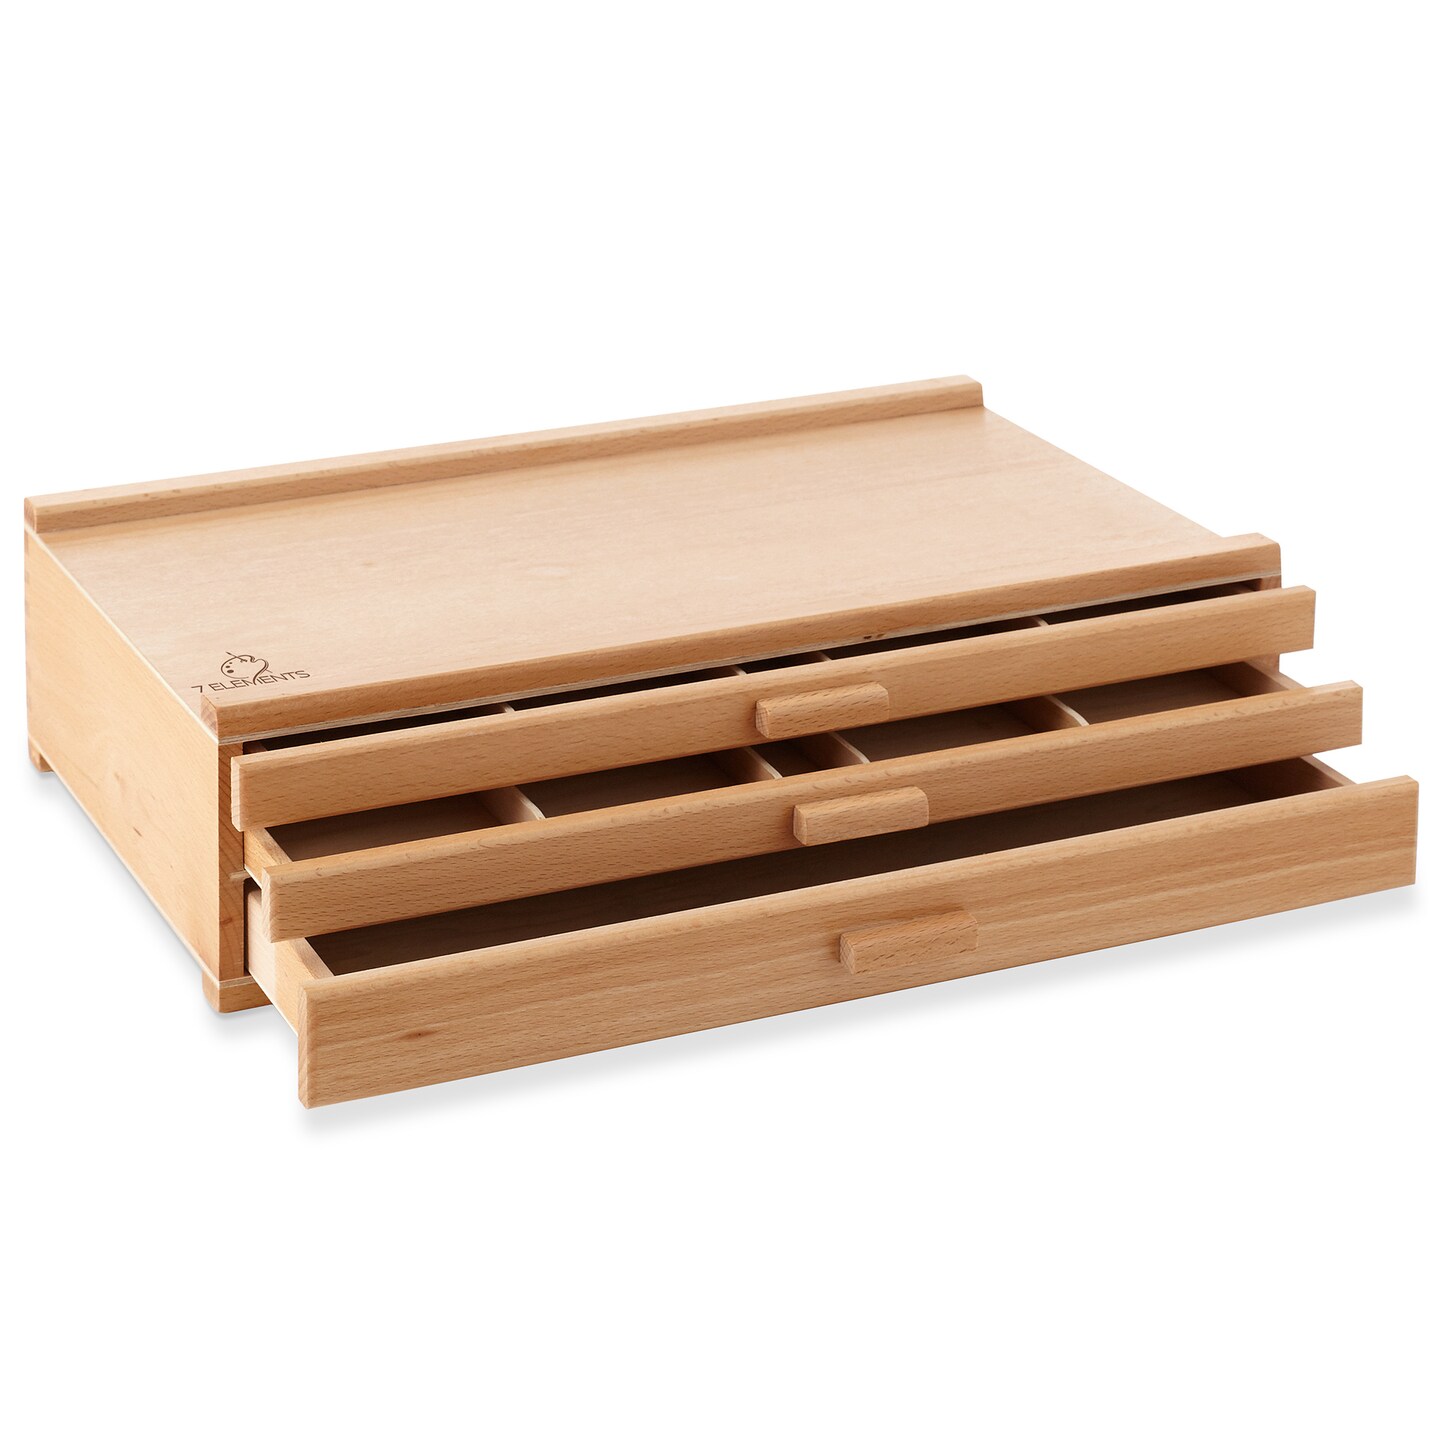 7 Elements Wooden Artist Storage Supply Box for Pastels, Pencils